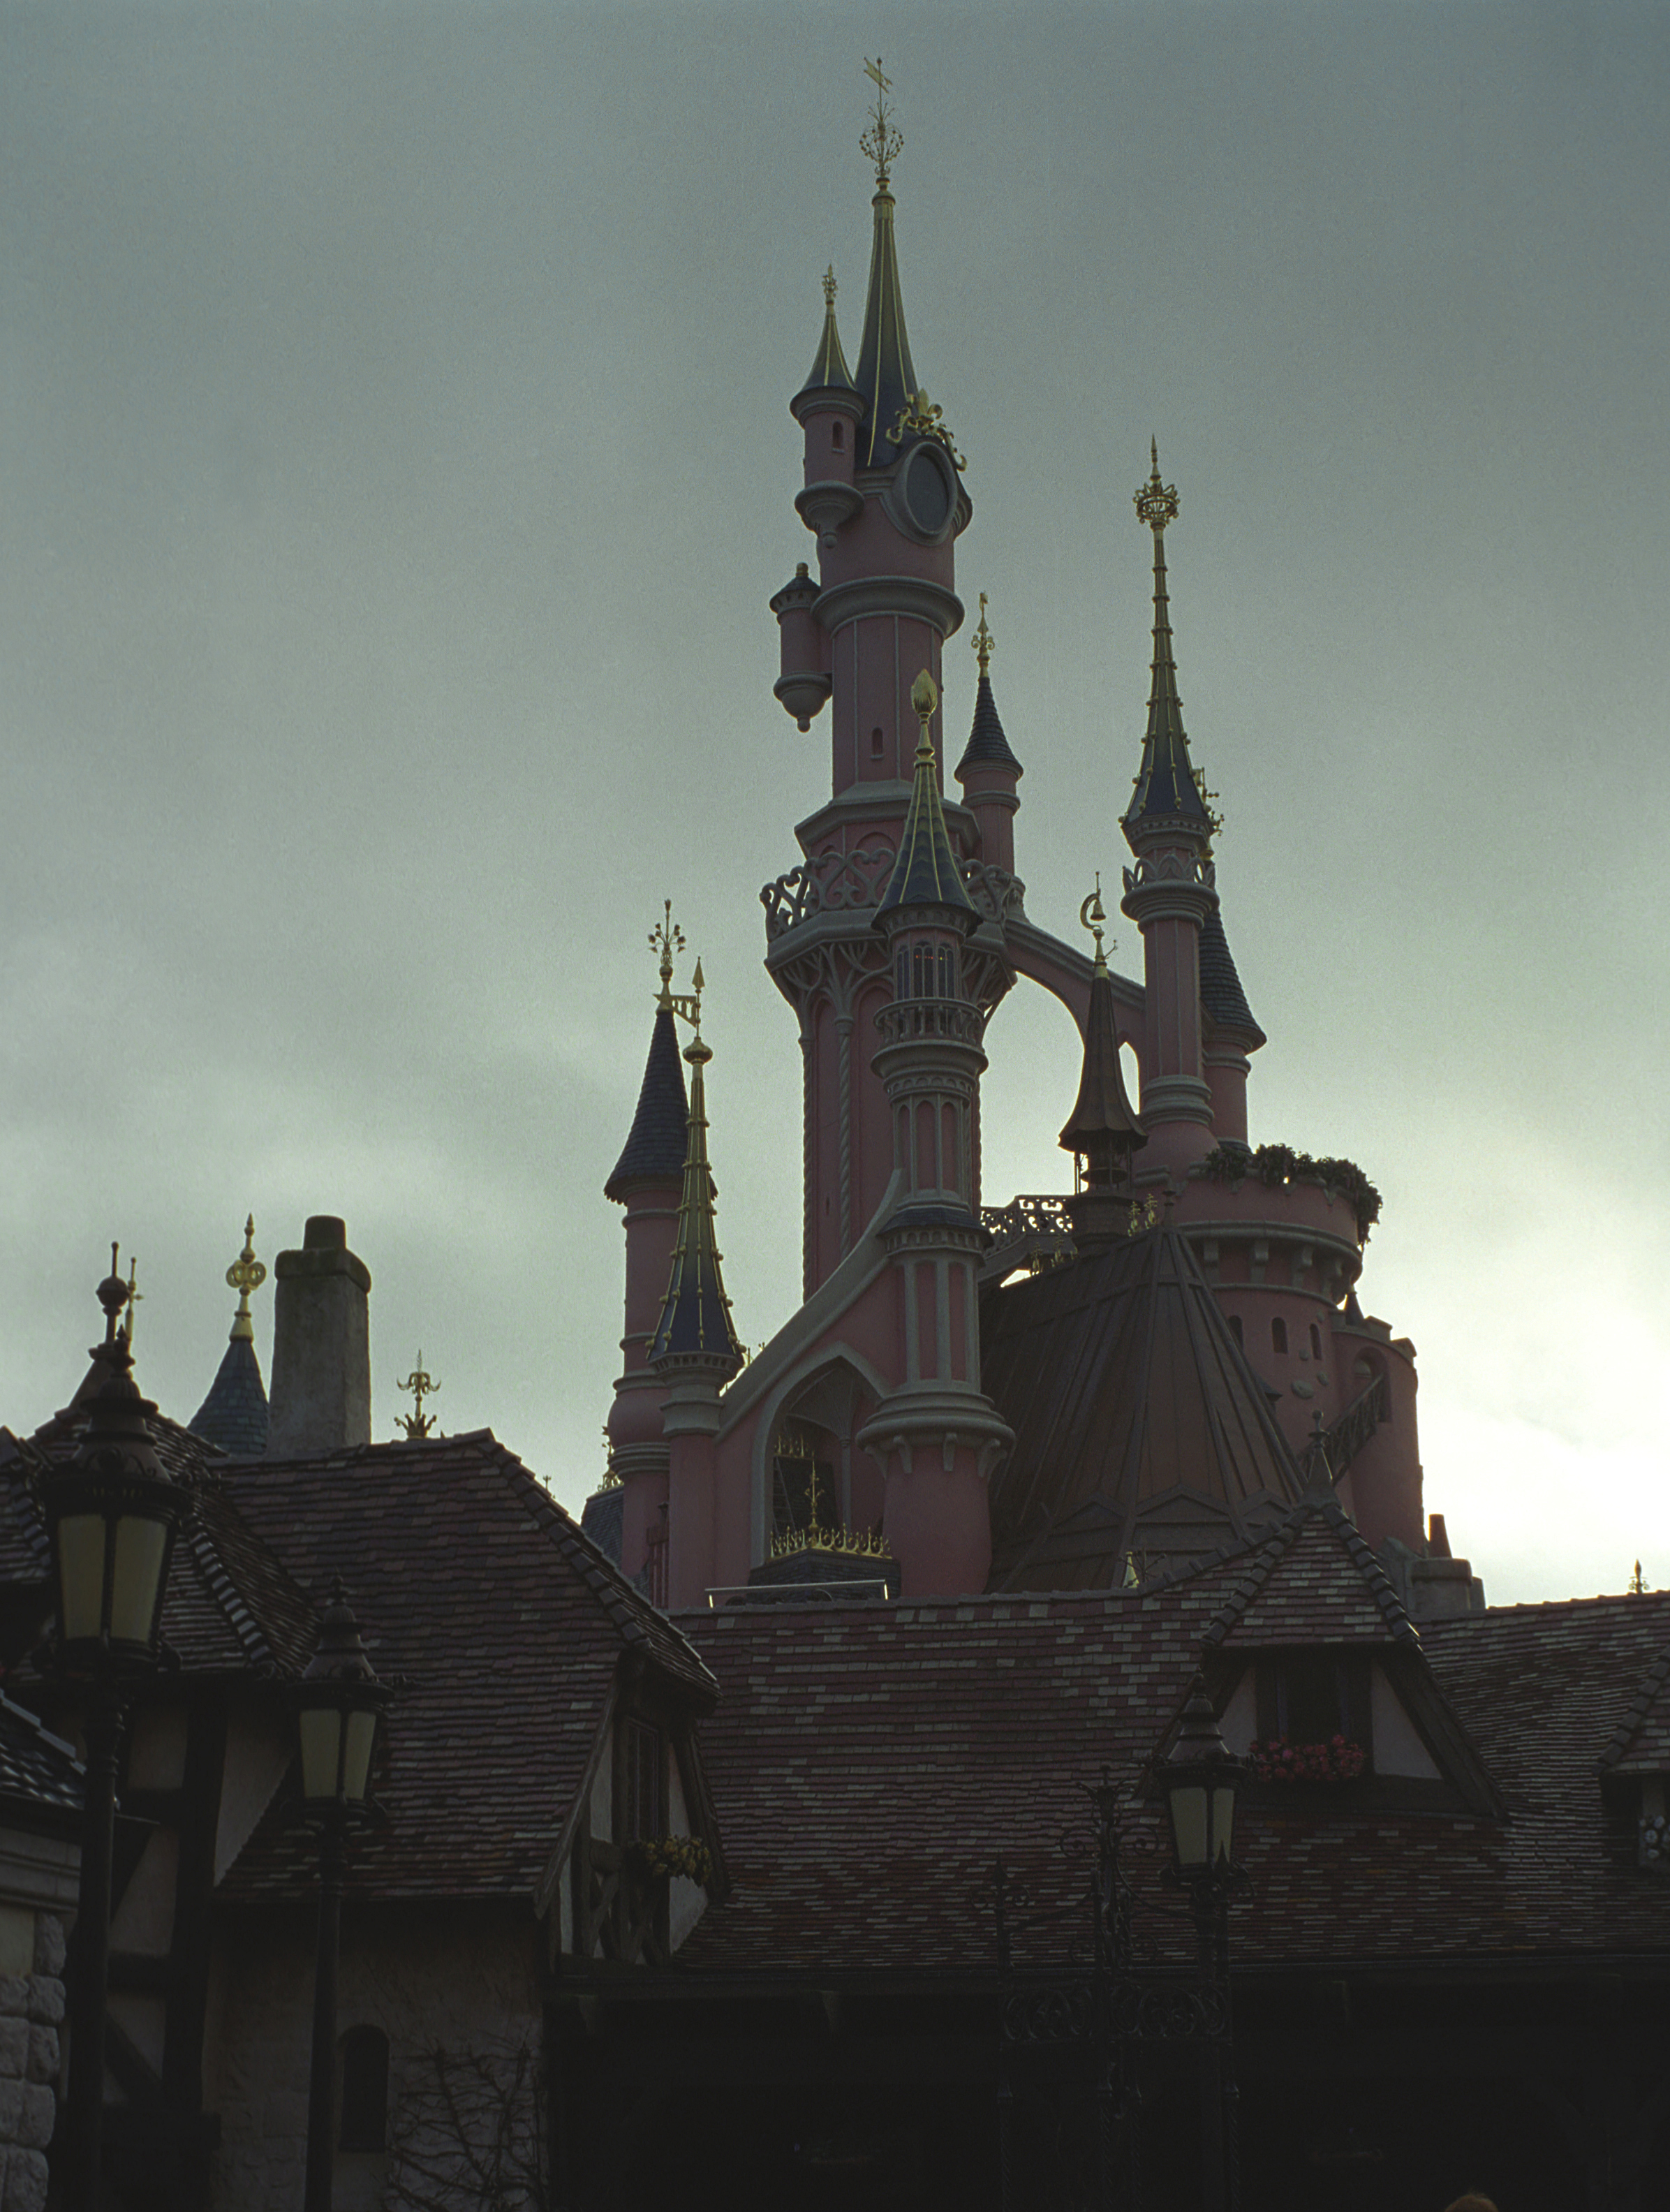 Sleeping Beautys castle